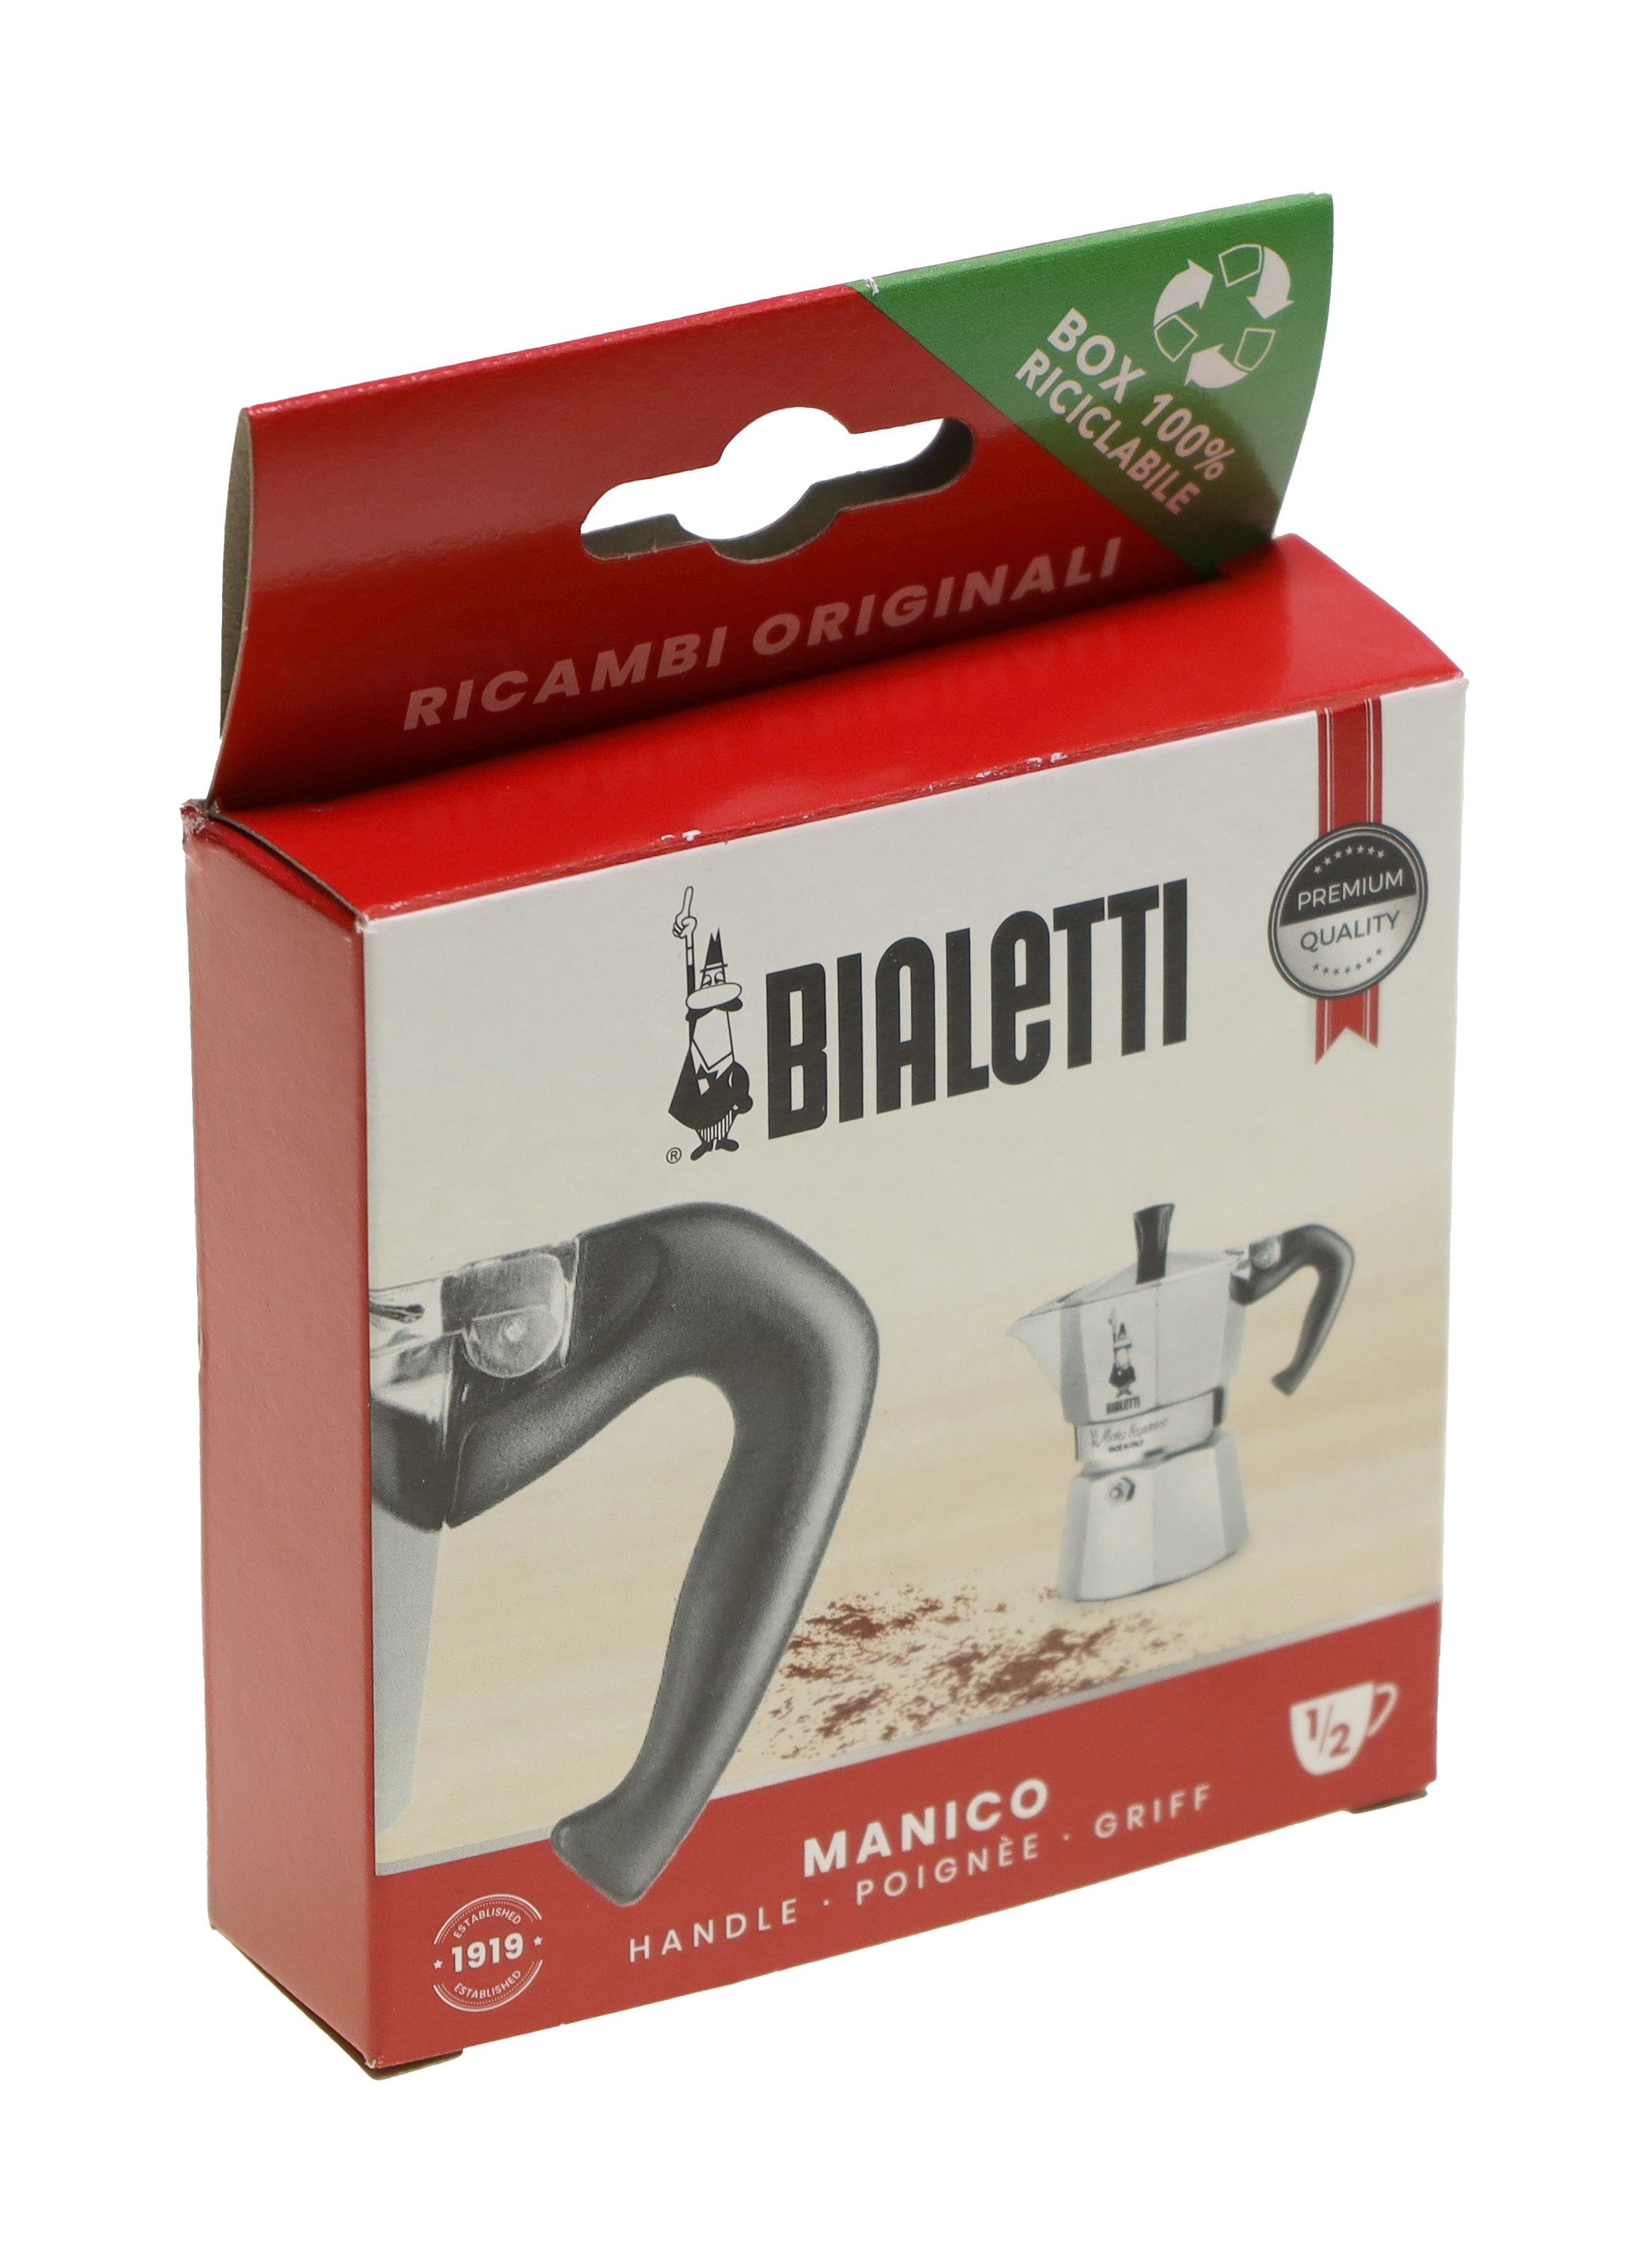 BIALETTI Griff Bialetti La Griff Mokina 800240 Espressomaschine für